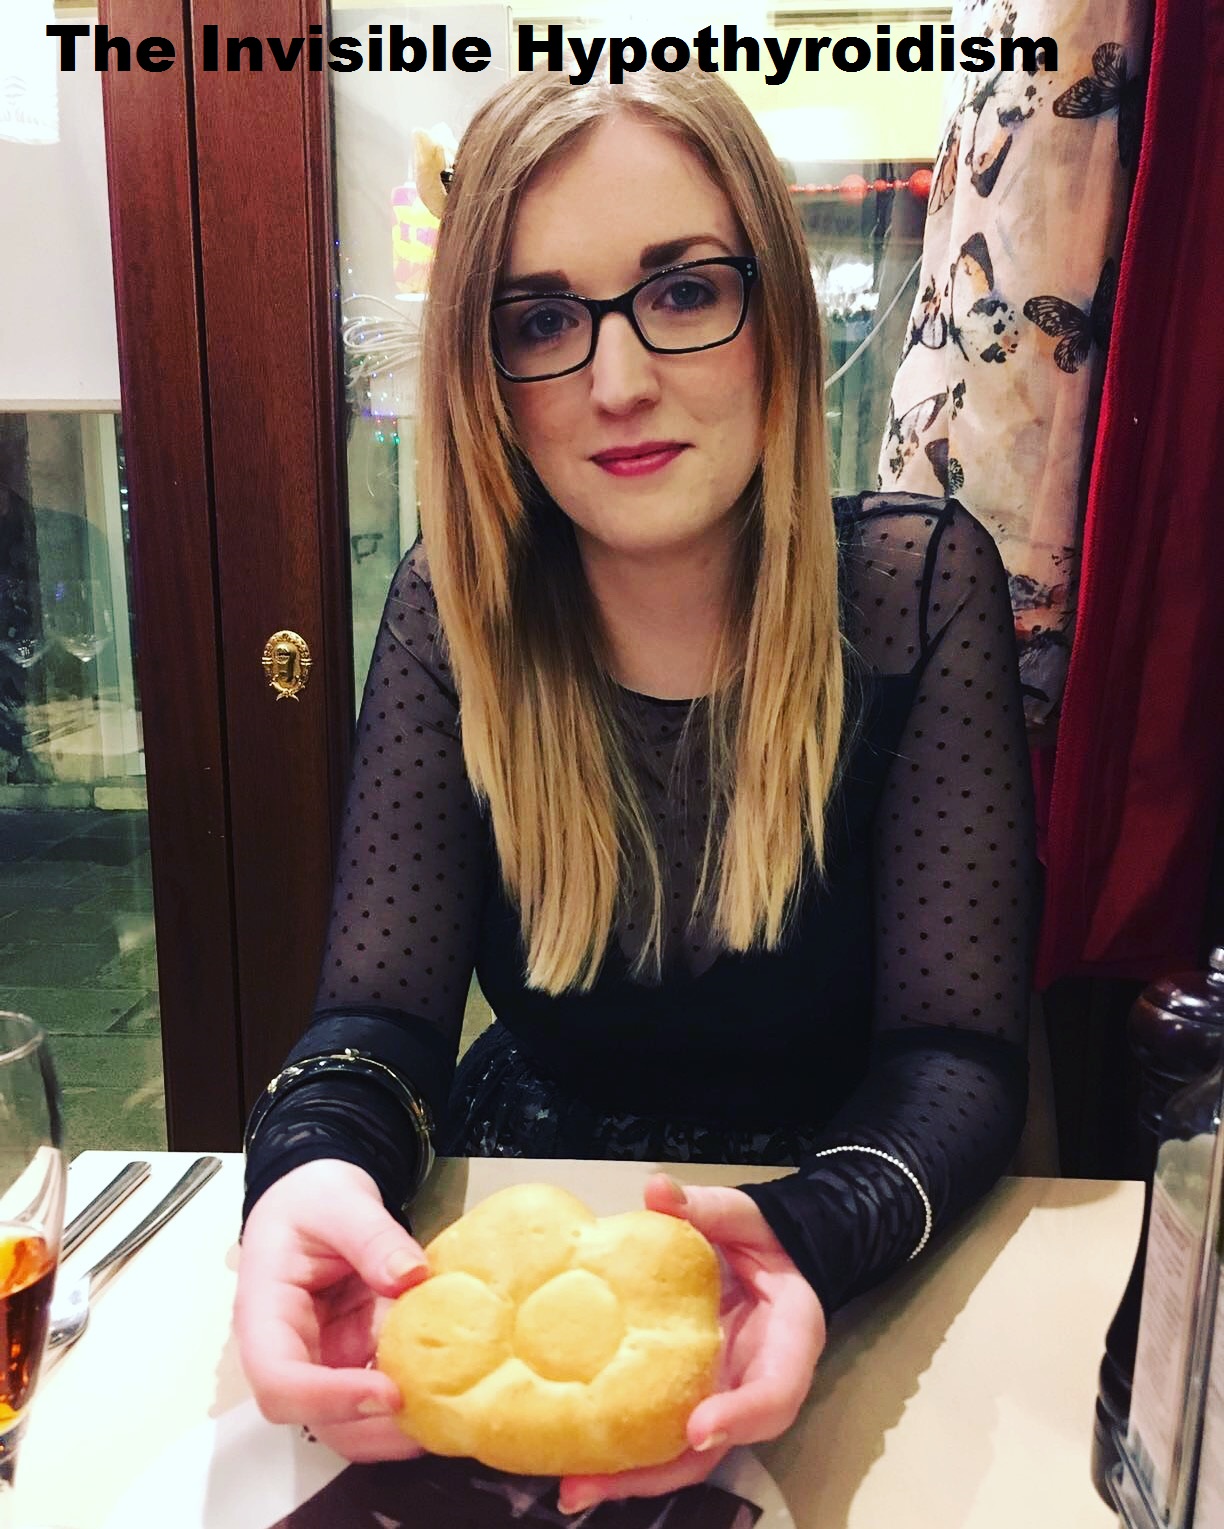 A photo of Rachel sat in a restaurant holding a gluten free bread roll